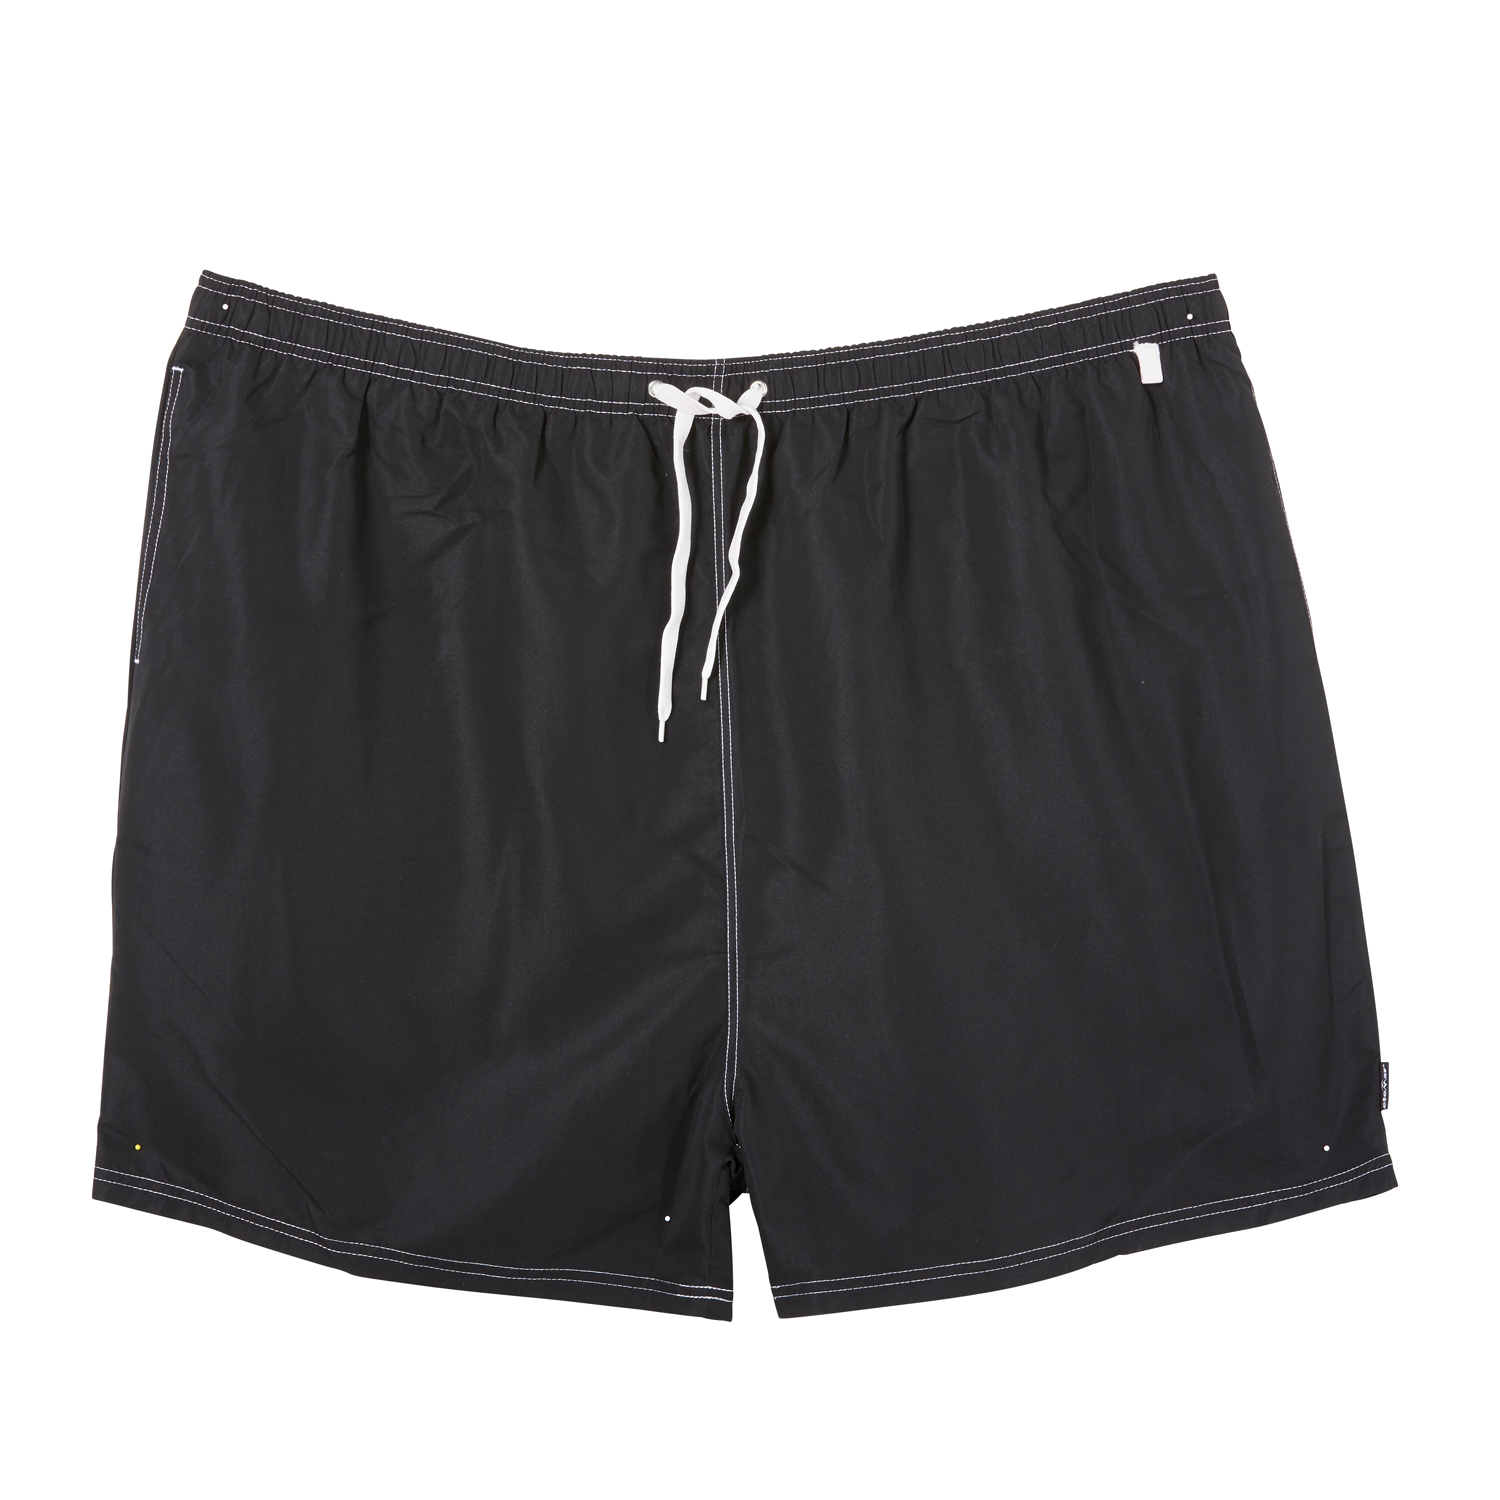 Swim shorts by eleMar for men dark grey in oversizes up to 9XL